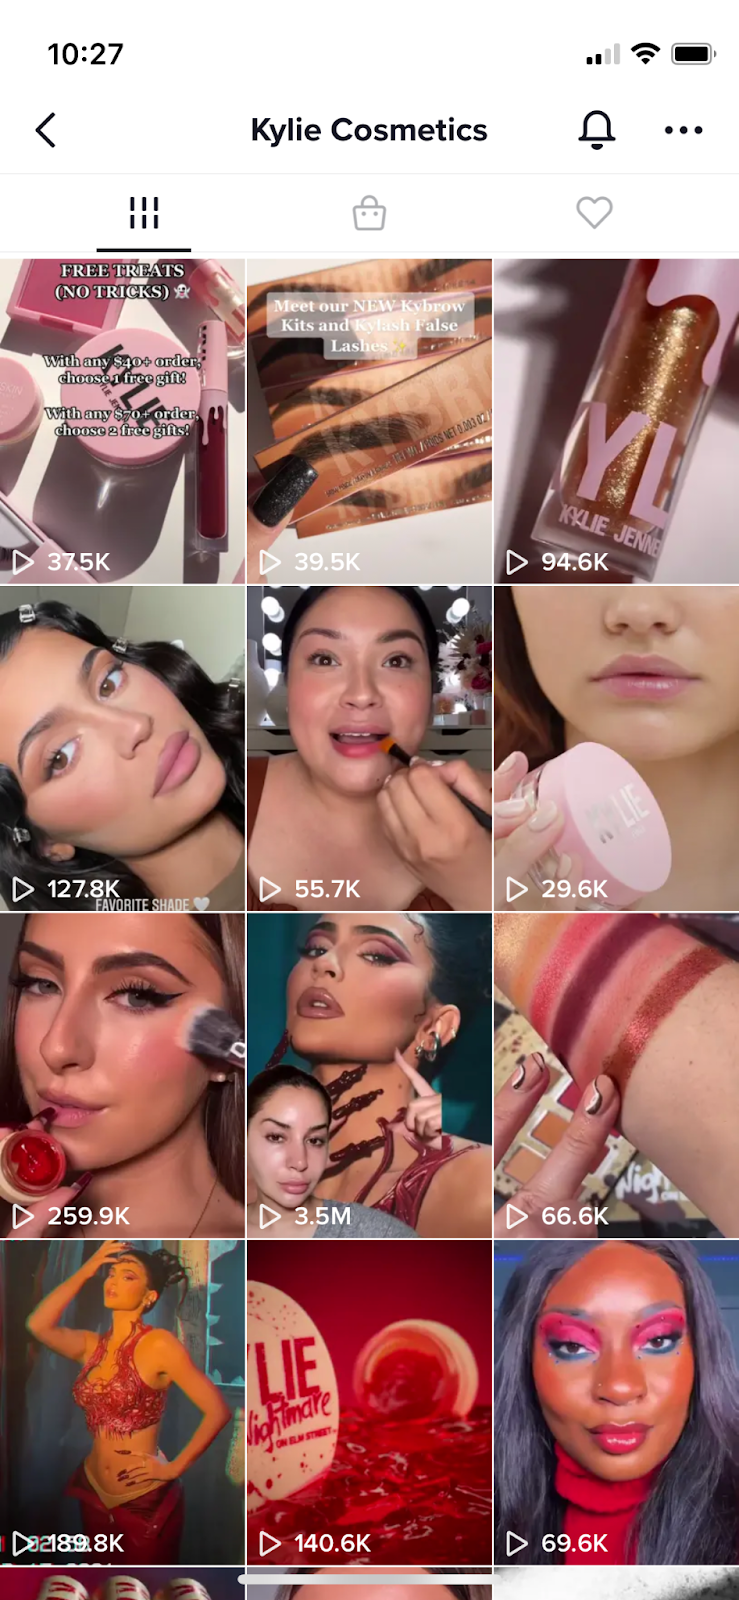 TIkTok feed for Kylie Cosmetics - social commerce